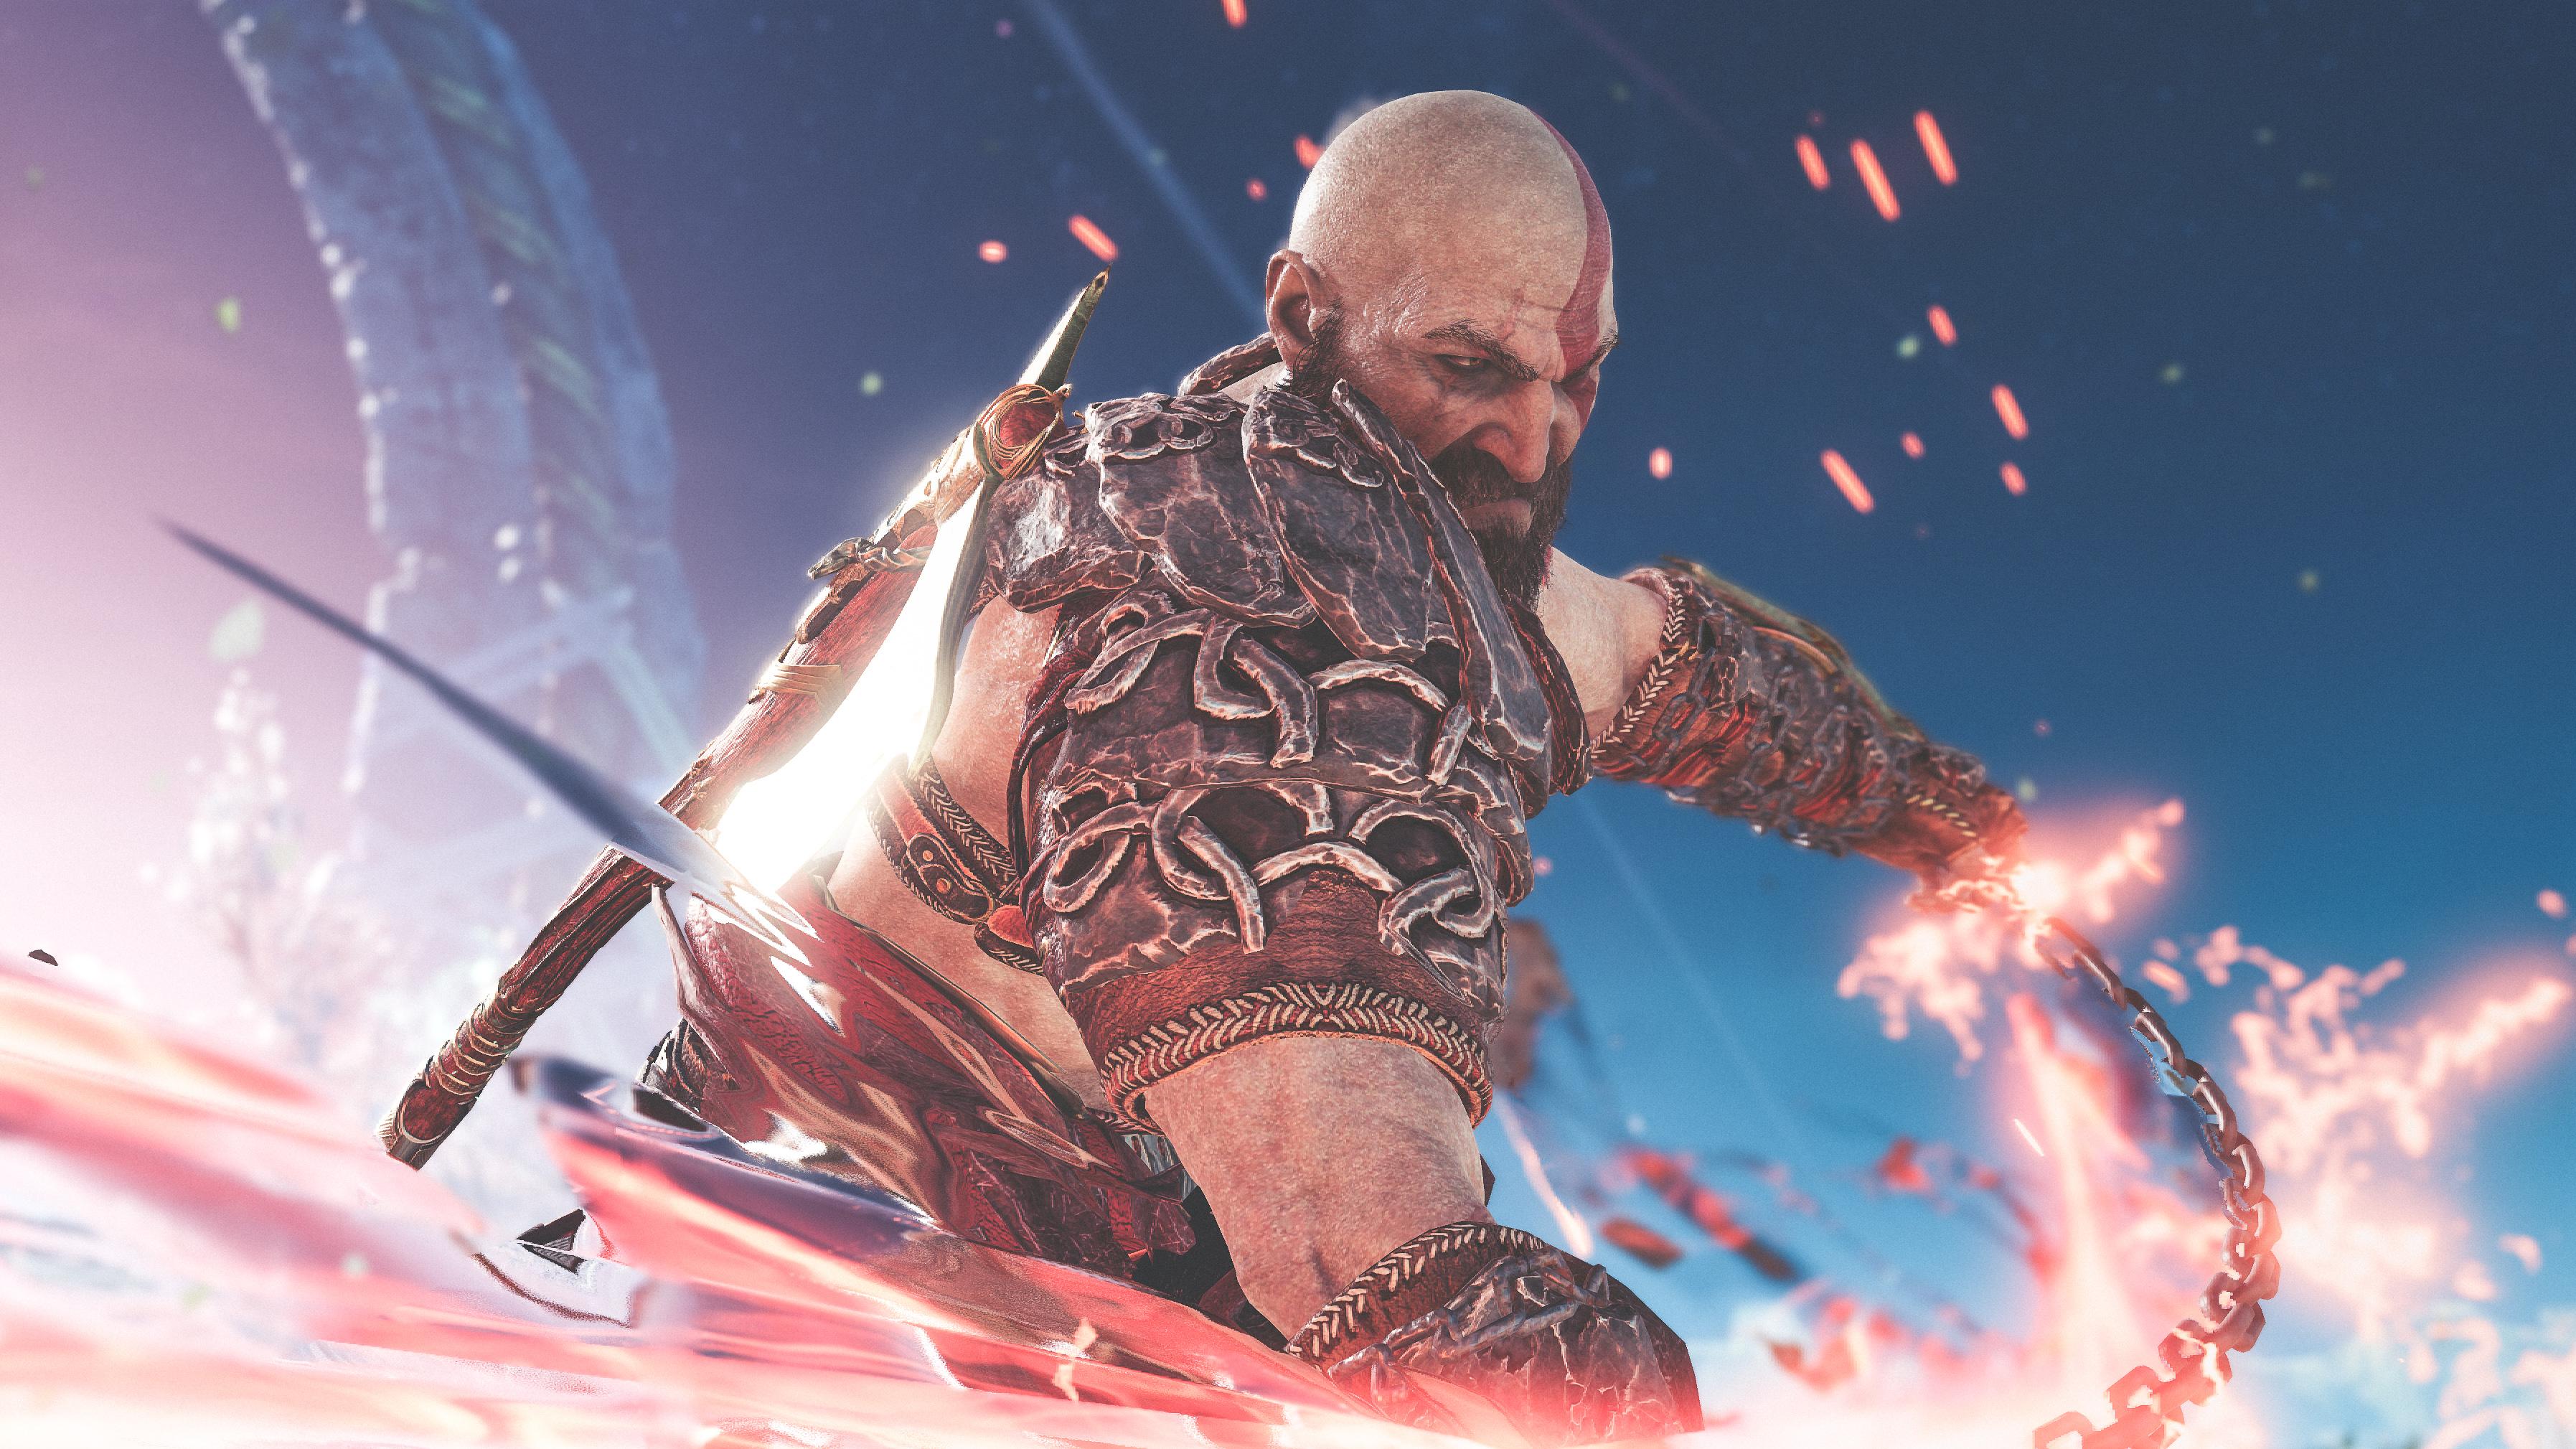 3590 x 2019 · jpeg - 4k Kratos God Of War 4, HD Games, 4k Wallpapers, Images, Backgrounds ...